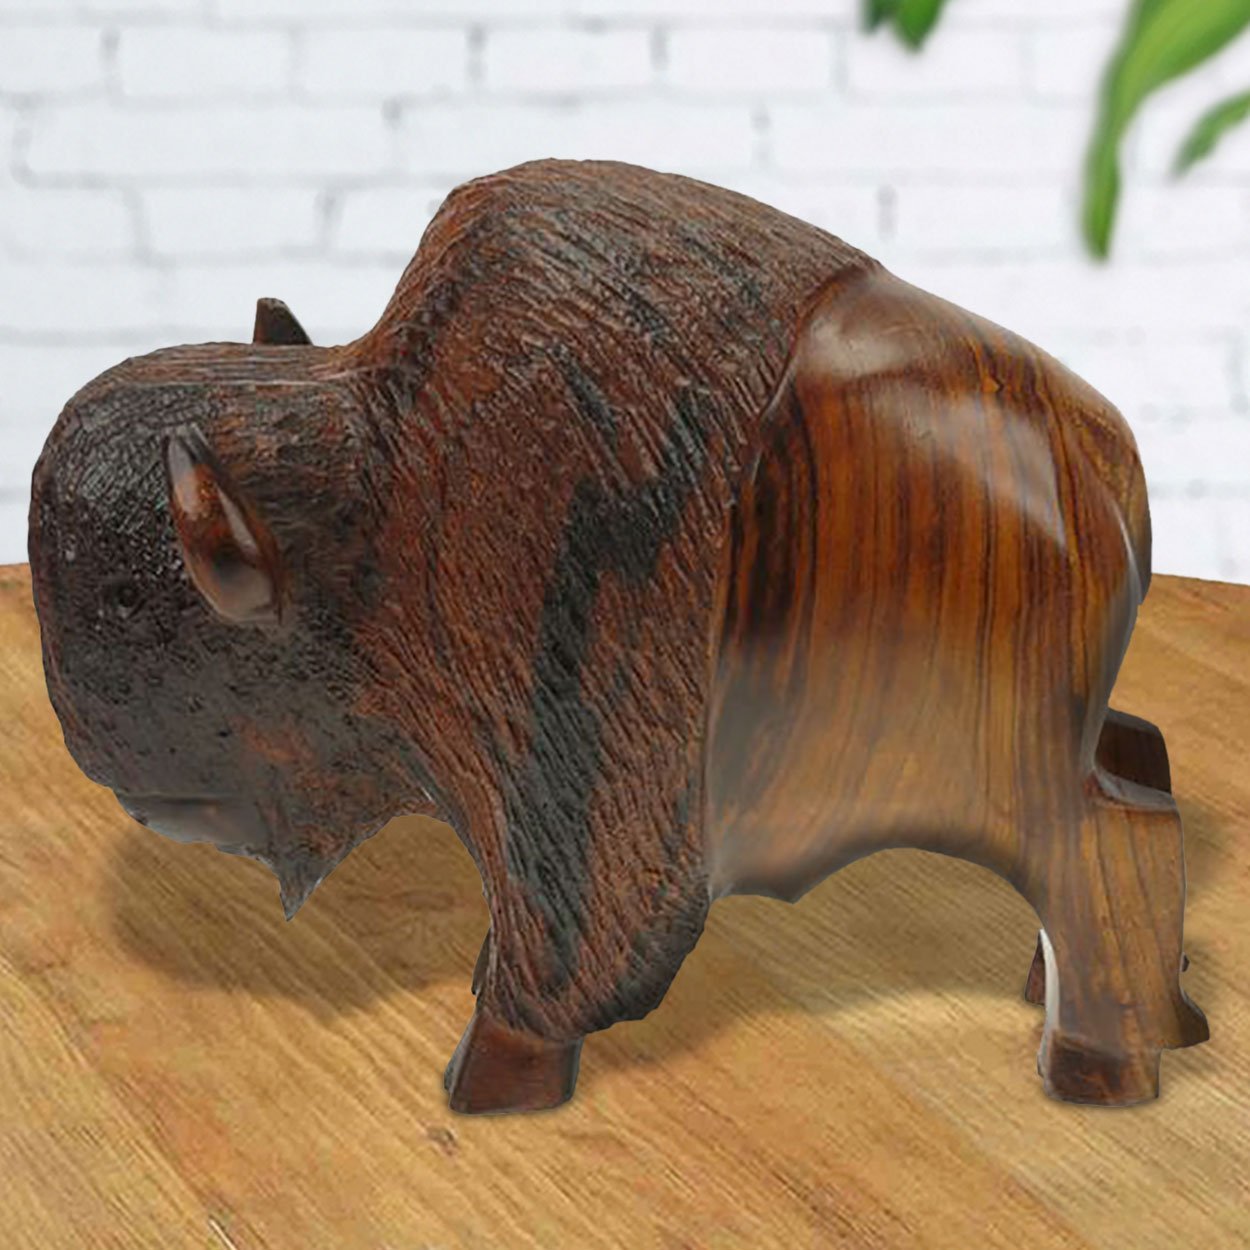 172117 - 5in Long Buffalo Ironwood Carving